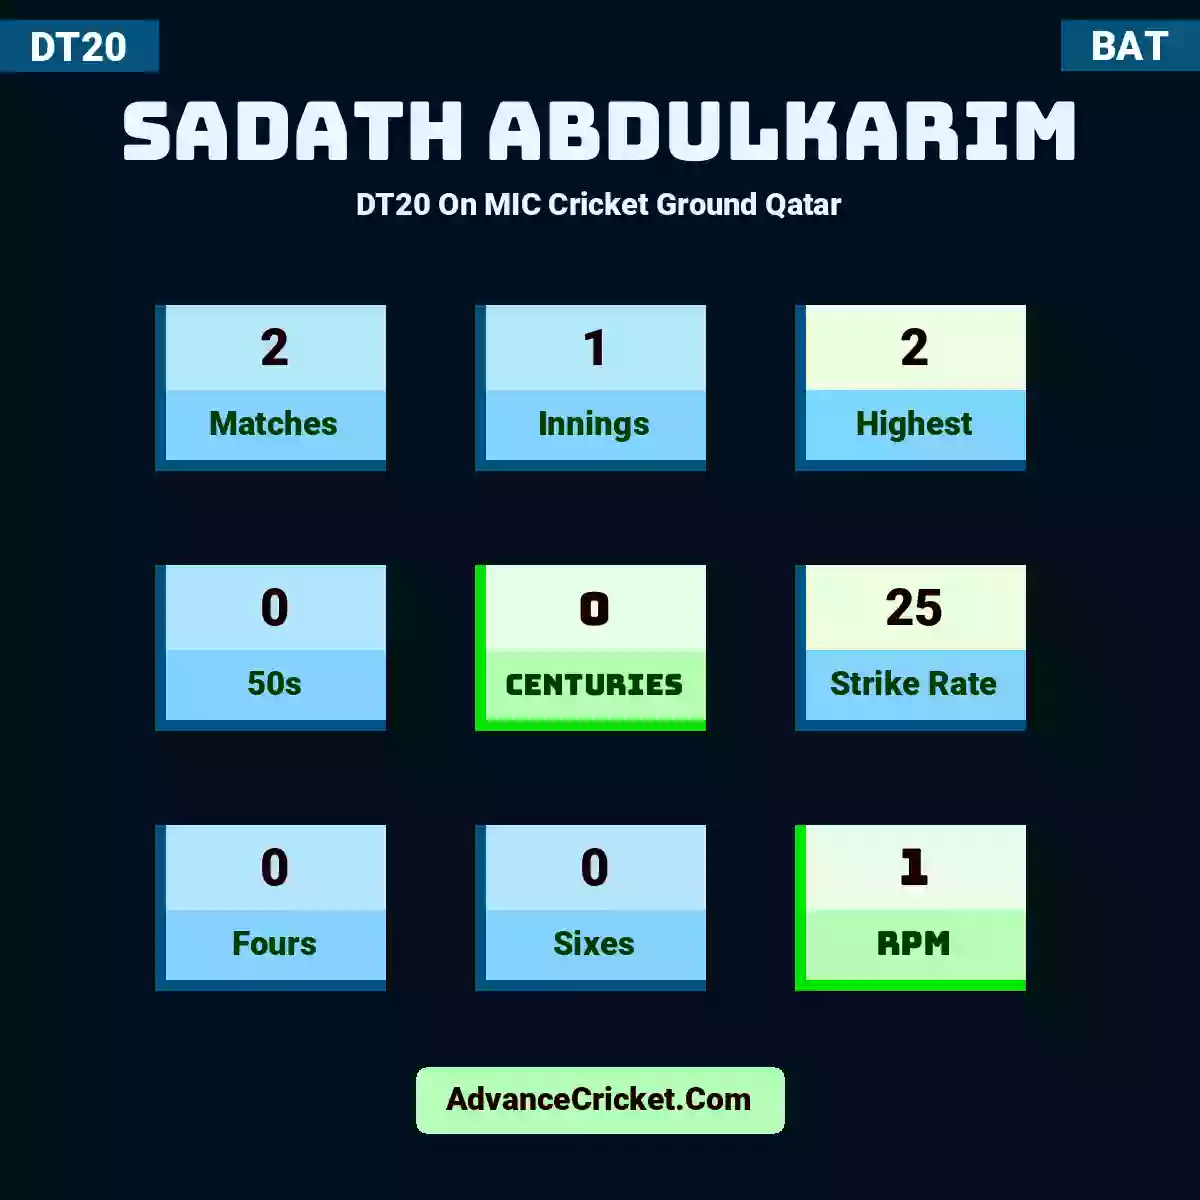 Sadath Abdulkarim DT20  On MIC Cricket Ground Qatar, Sadath Abdulkarim played 2 matches, scored 2 runs as highest, 0 half-centuries, and 0 centuries, with a strike rate of 25. S.Abdulkarim hit 0 fours and 0 sixes, with an RPM of 1.